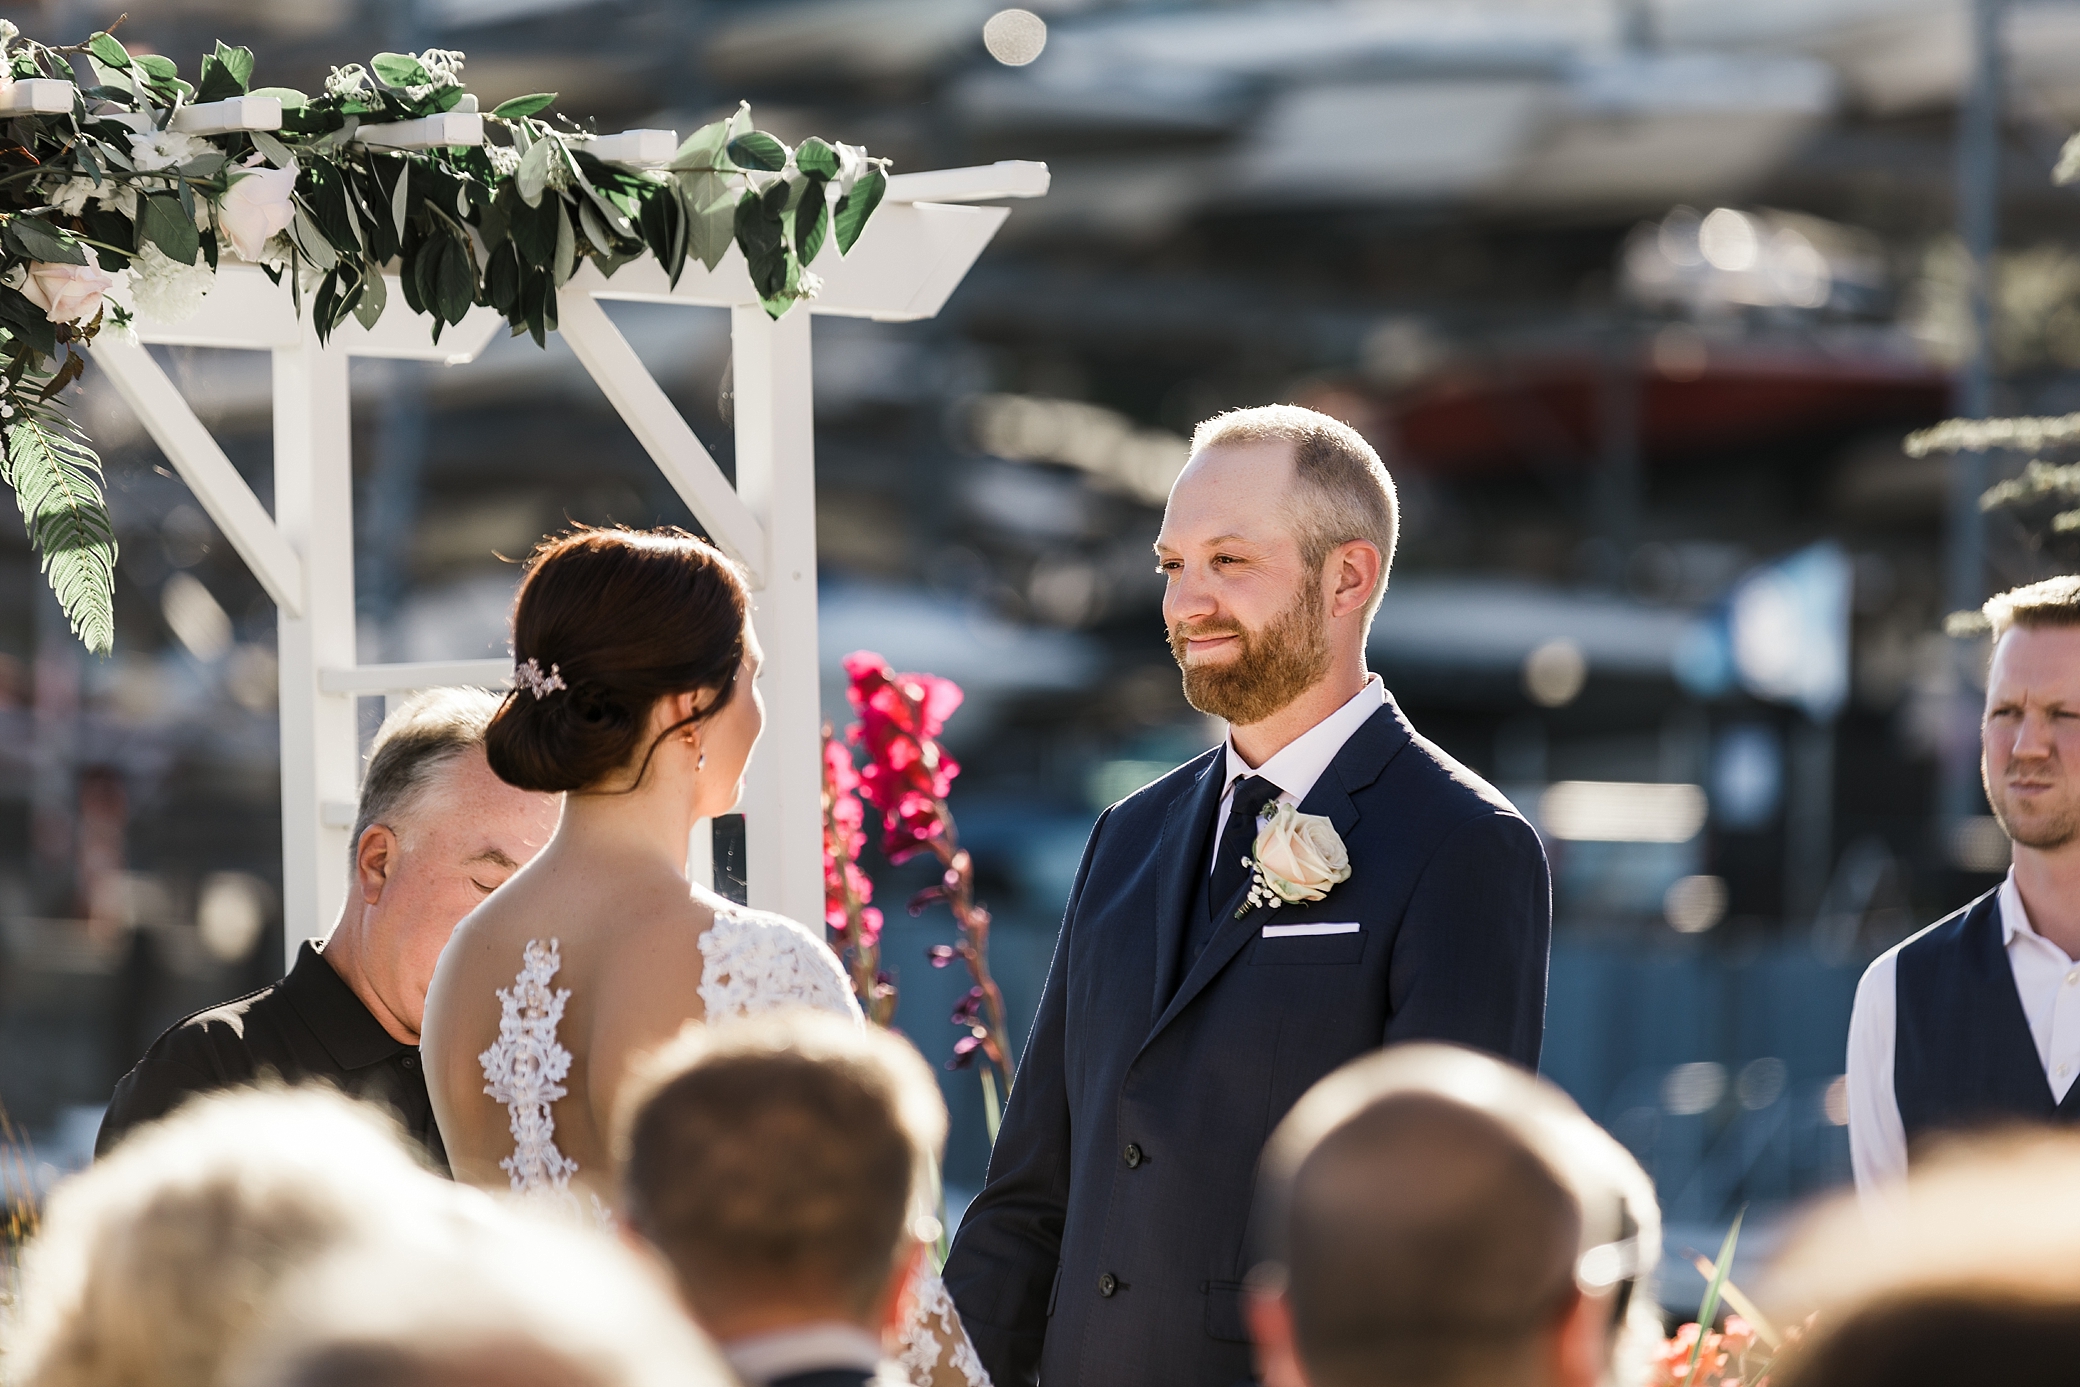 Seattle waterfront wedding ceremony at MV Skansonia wedding venue | Megan Montalvo Photography 